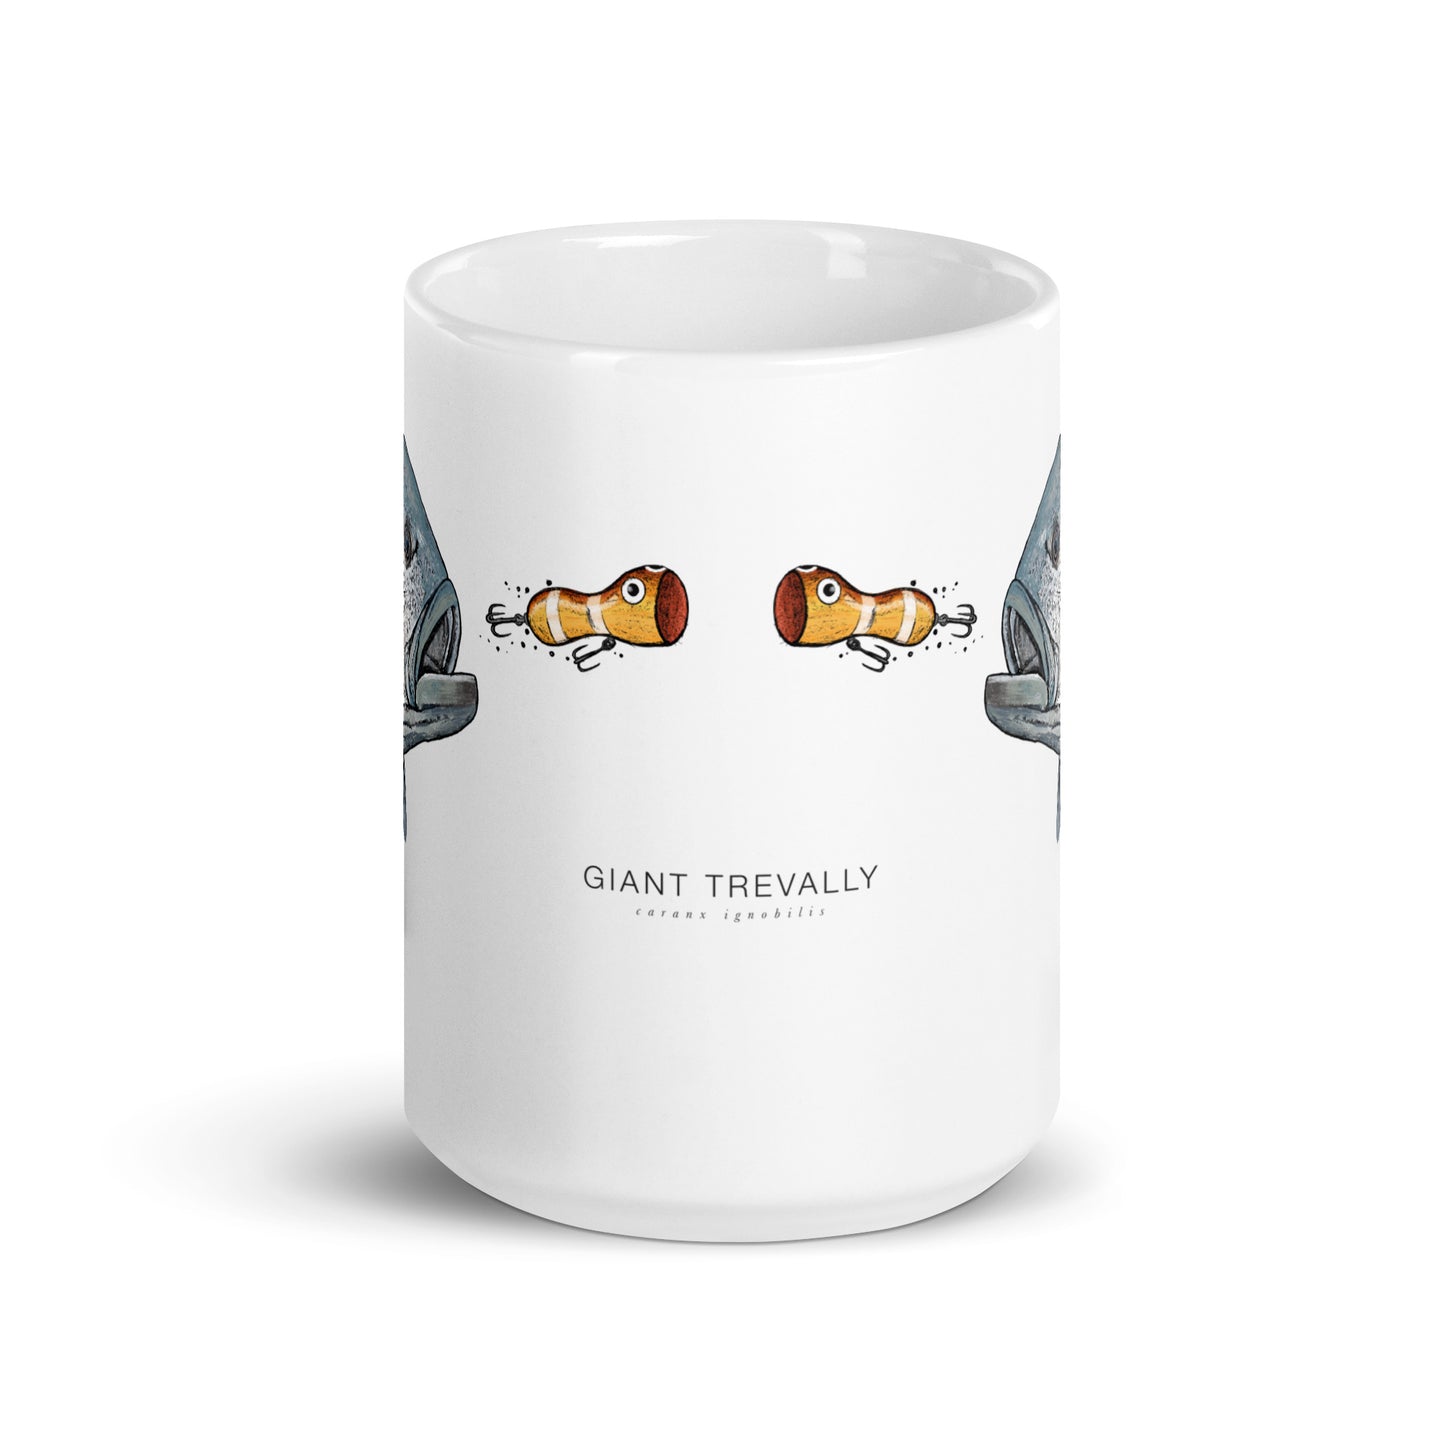 Giant Trevally Popping mug